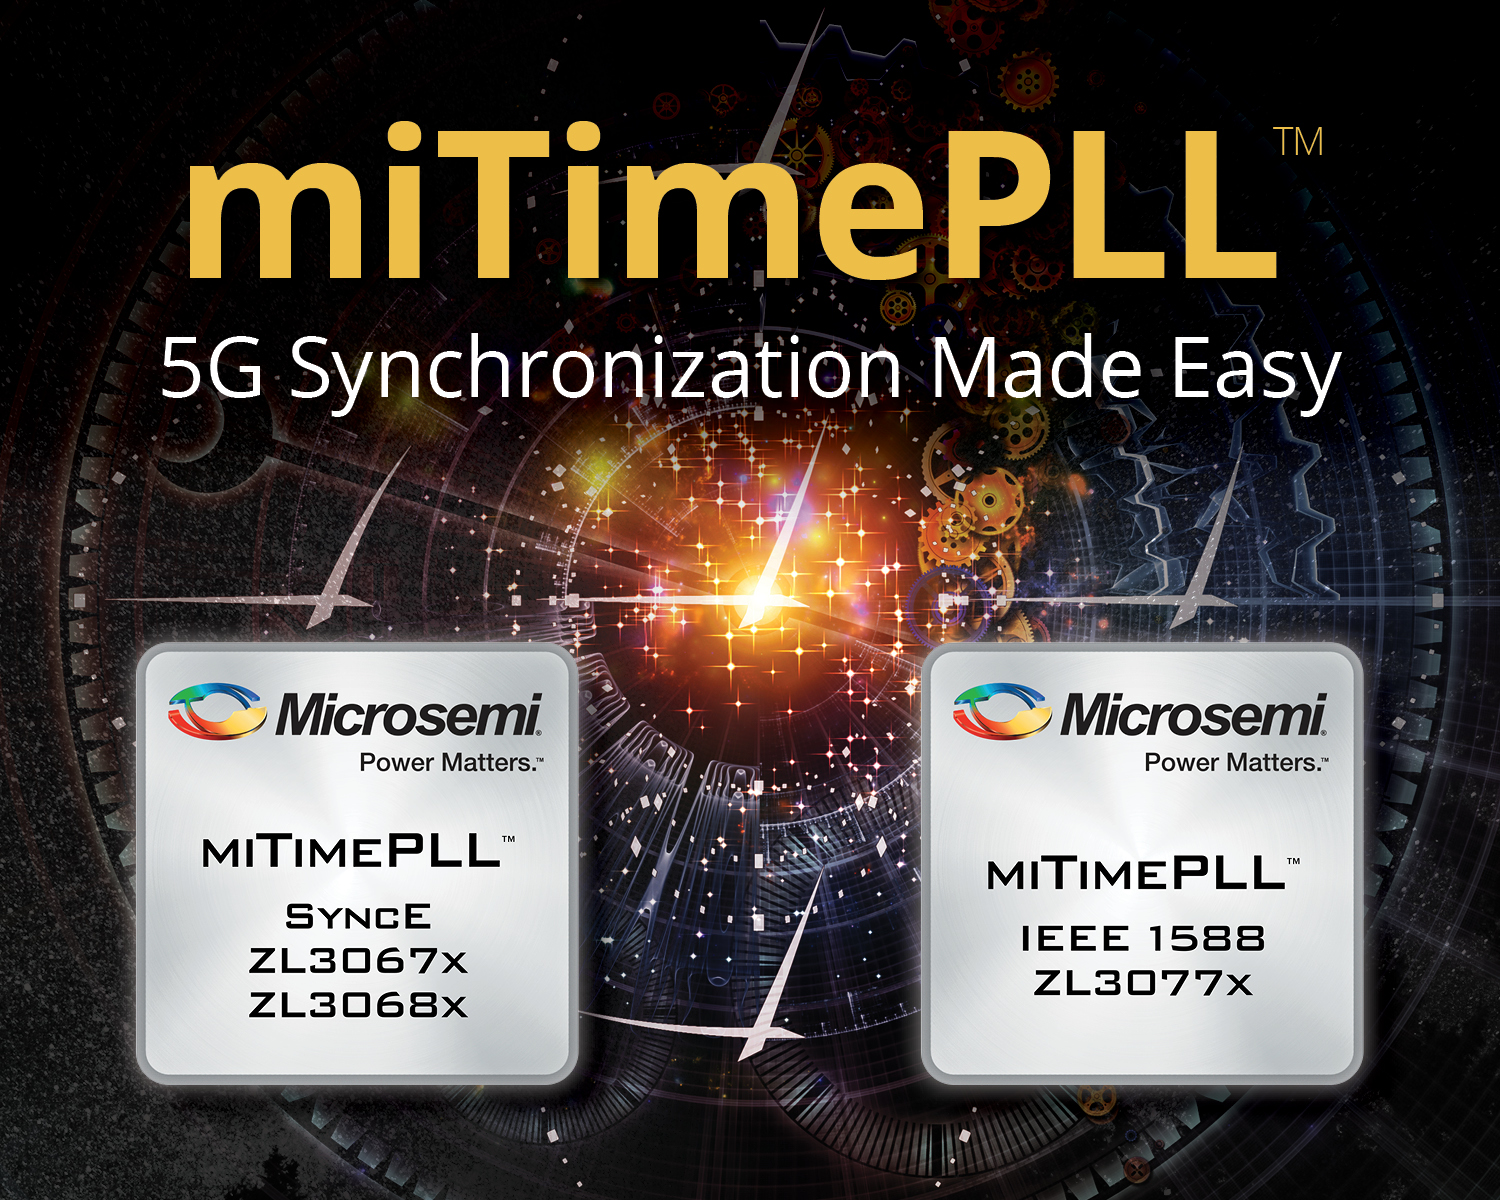 Advanced miTimePLL technology-5G Synchronization made easy